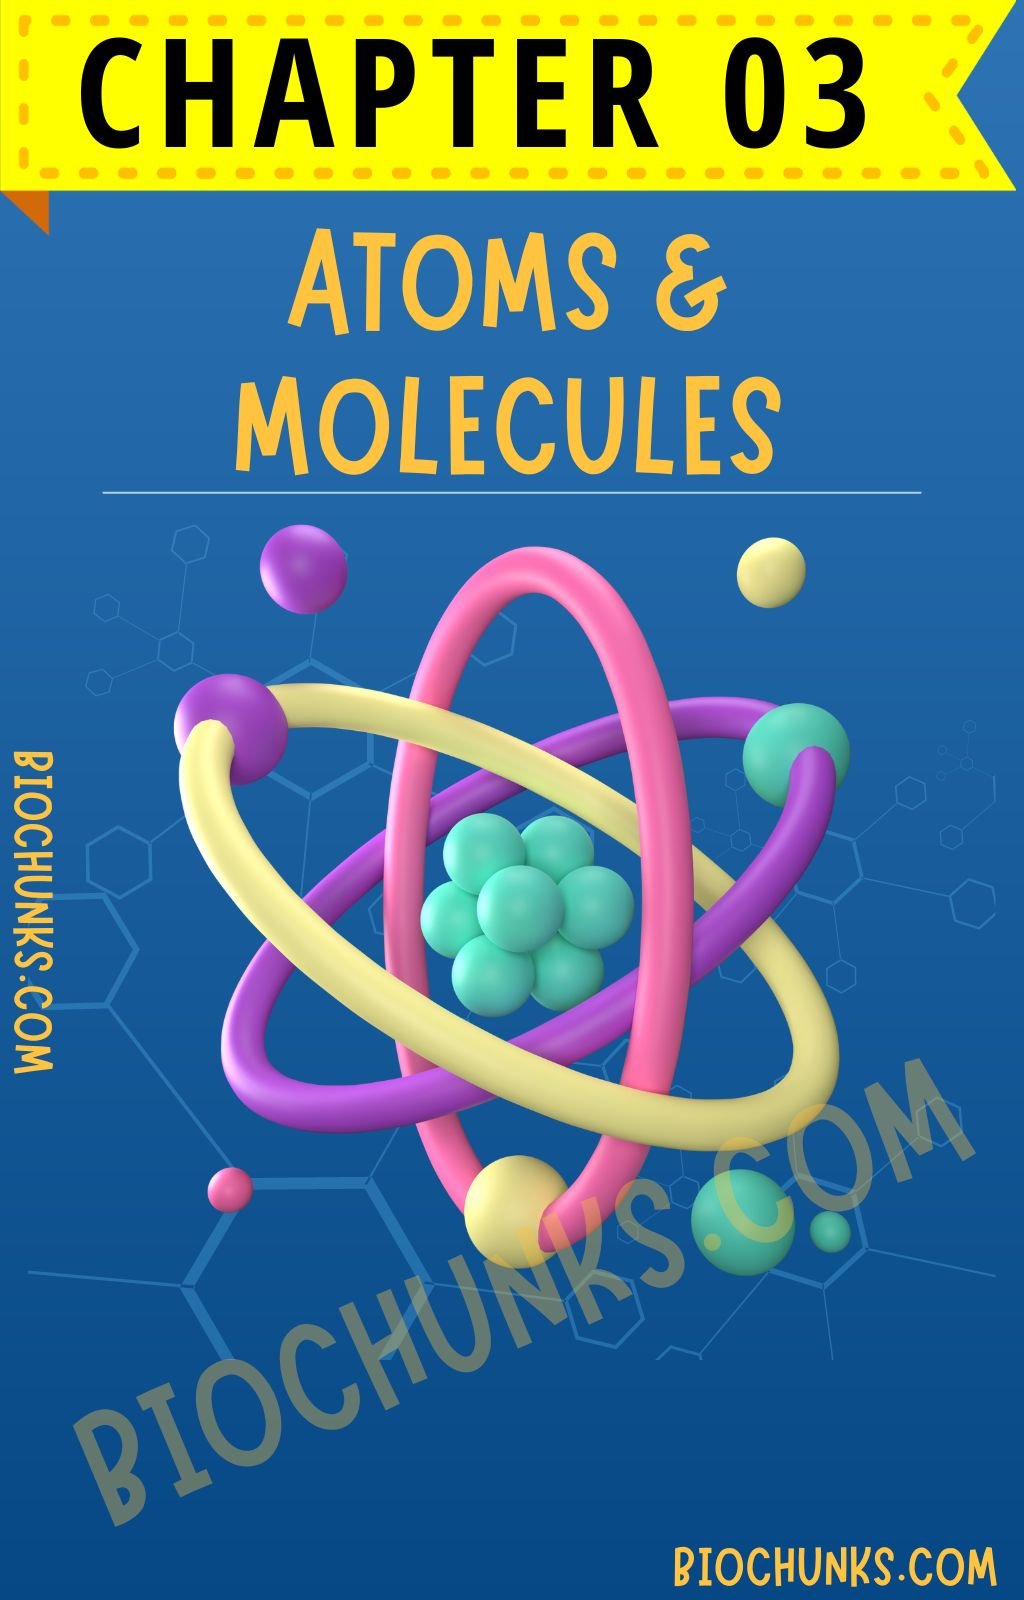 Atoms & Molecules Chapter 03 Class 9th biochunks.com